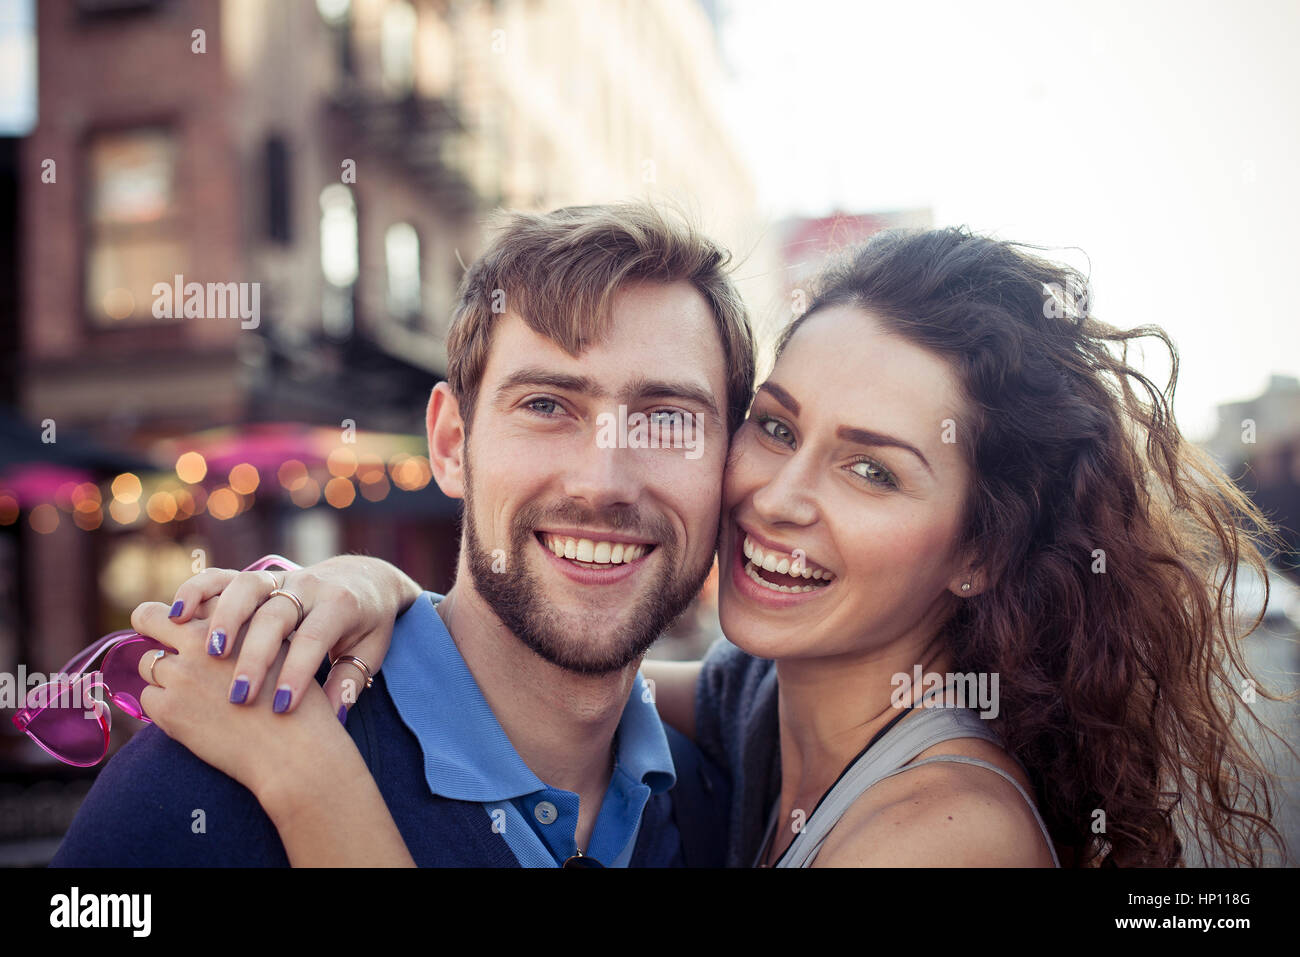 Couple embracing outdoors, portrait Stock Photo